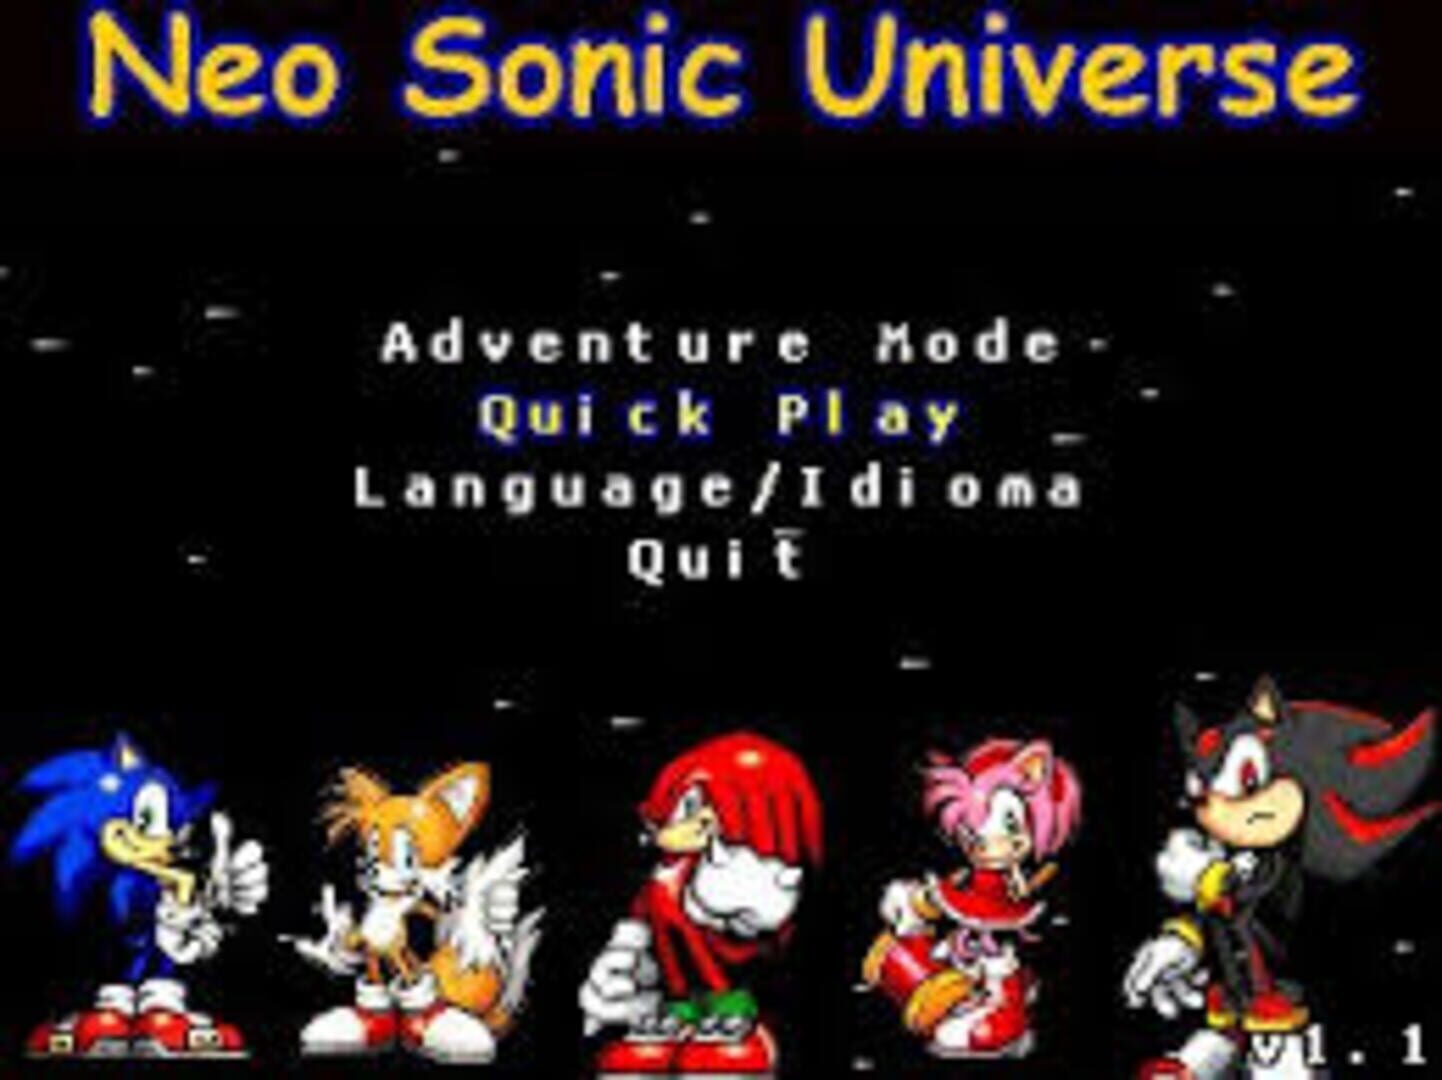 Neo Sonic Universe Image